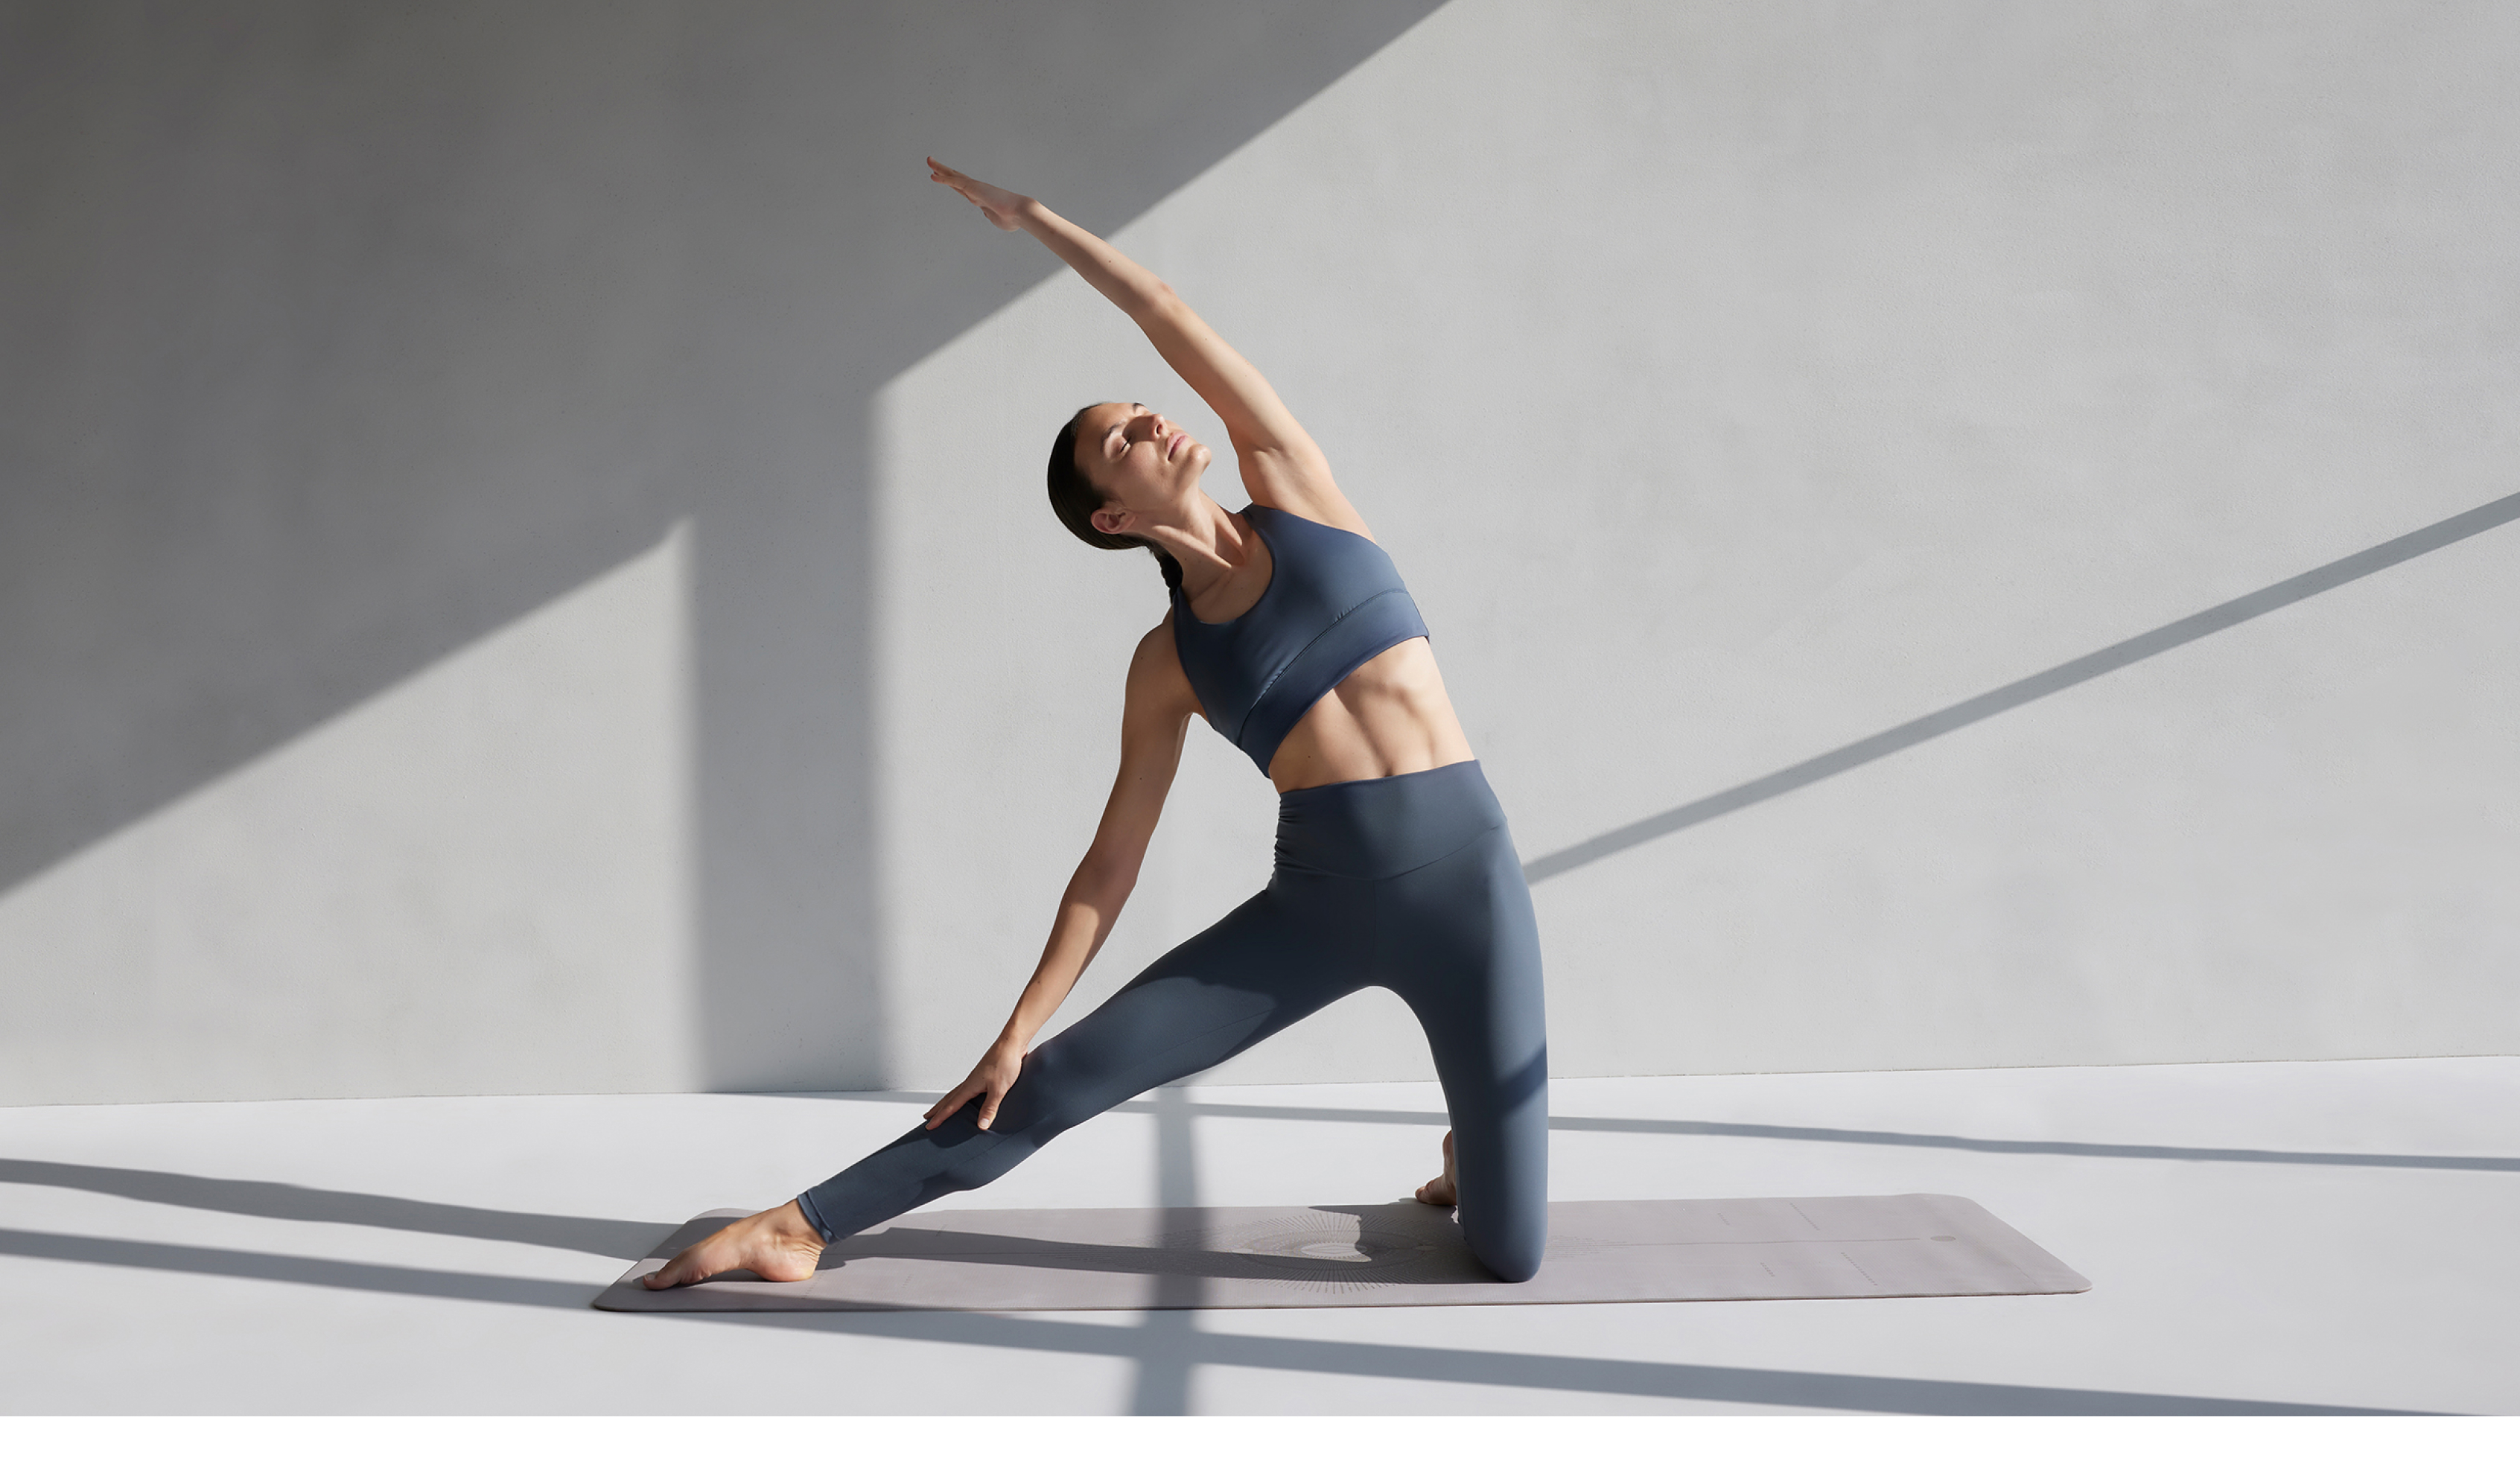 OYSHO - Introducing the new Yoga Dance collection inspired by the  combination of yoga poses and dance movements.  نقدم  لكِ مجموعة Yoga Dance الجديدة المستوحاة من مزيج من اليوغا وحركات الرقص. #